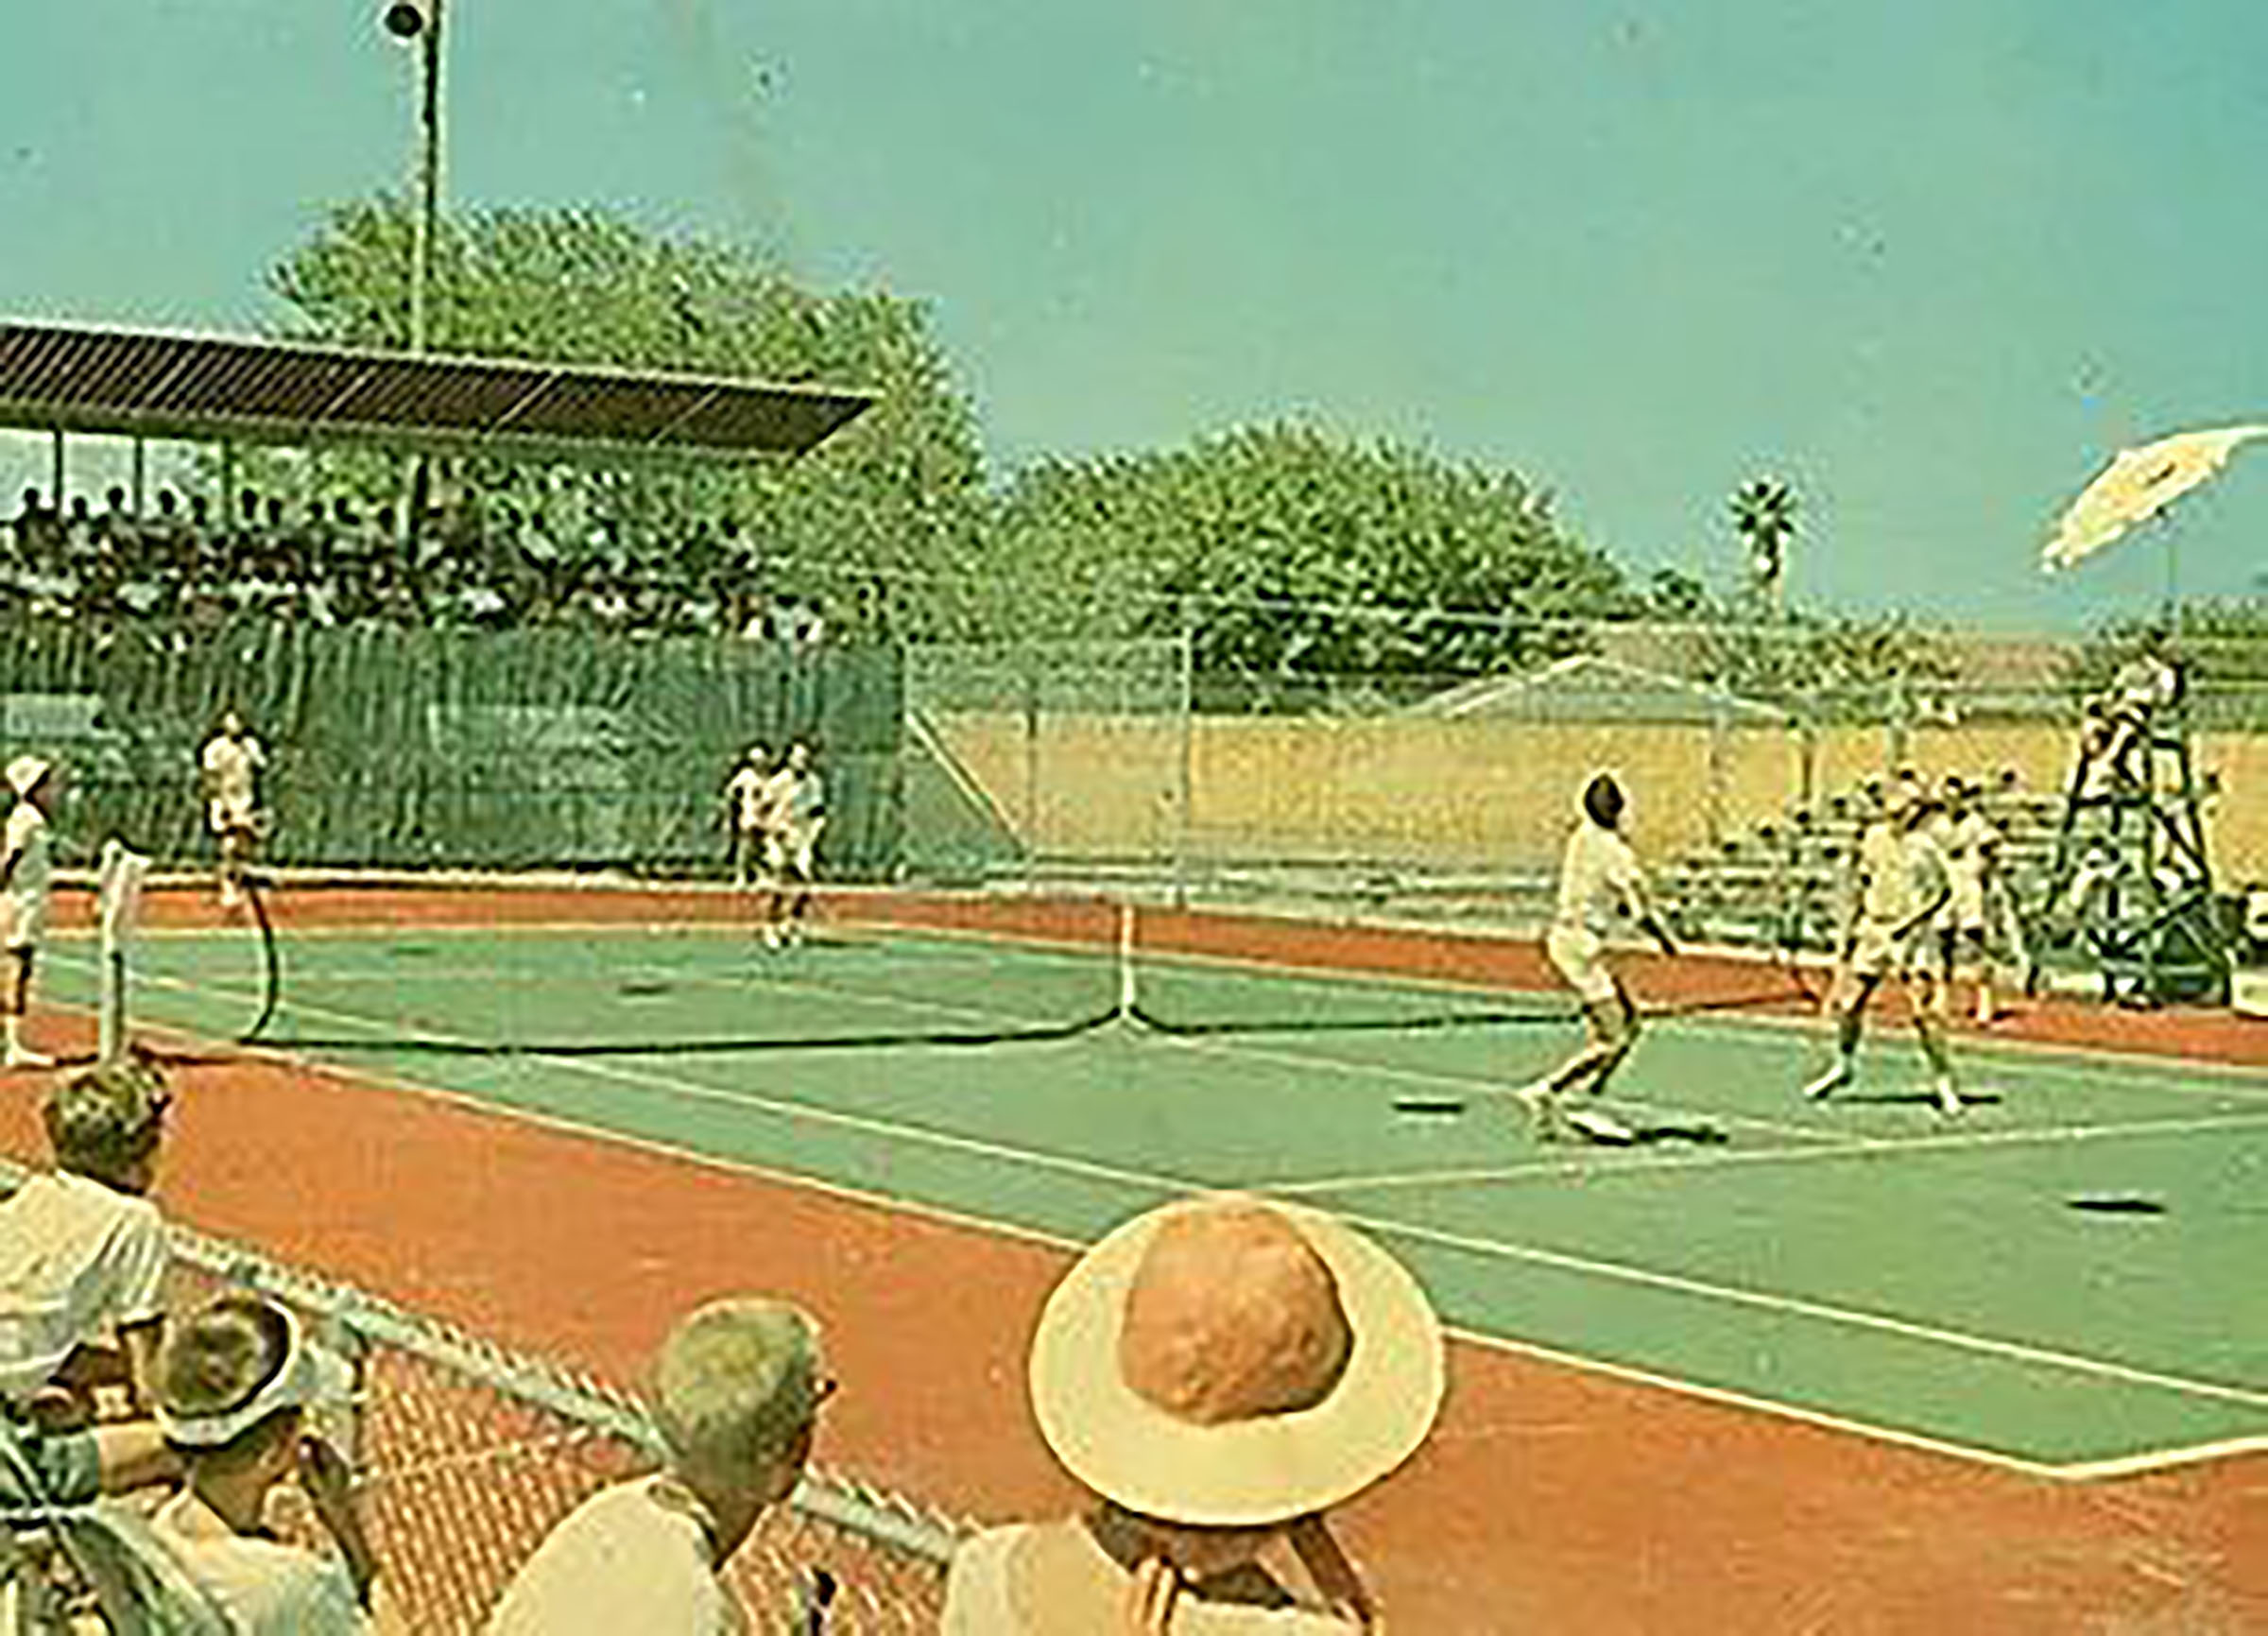 The H-E-B Tennis Center's stadium court in Corpus Christi in the 1960s. Photo courtesy H. E. Butt Foundation. 